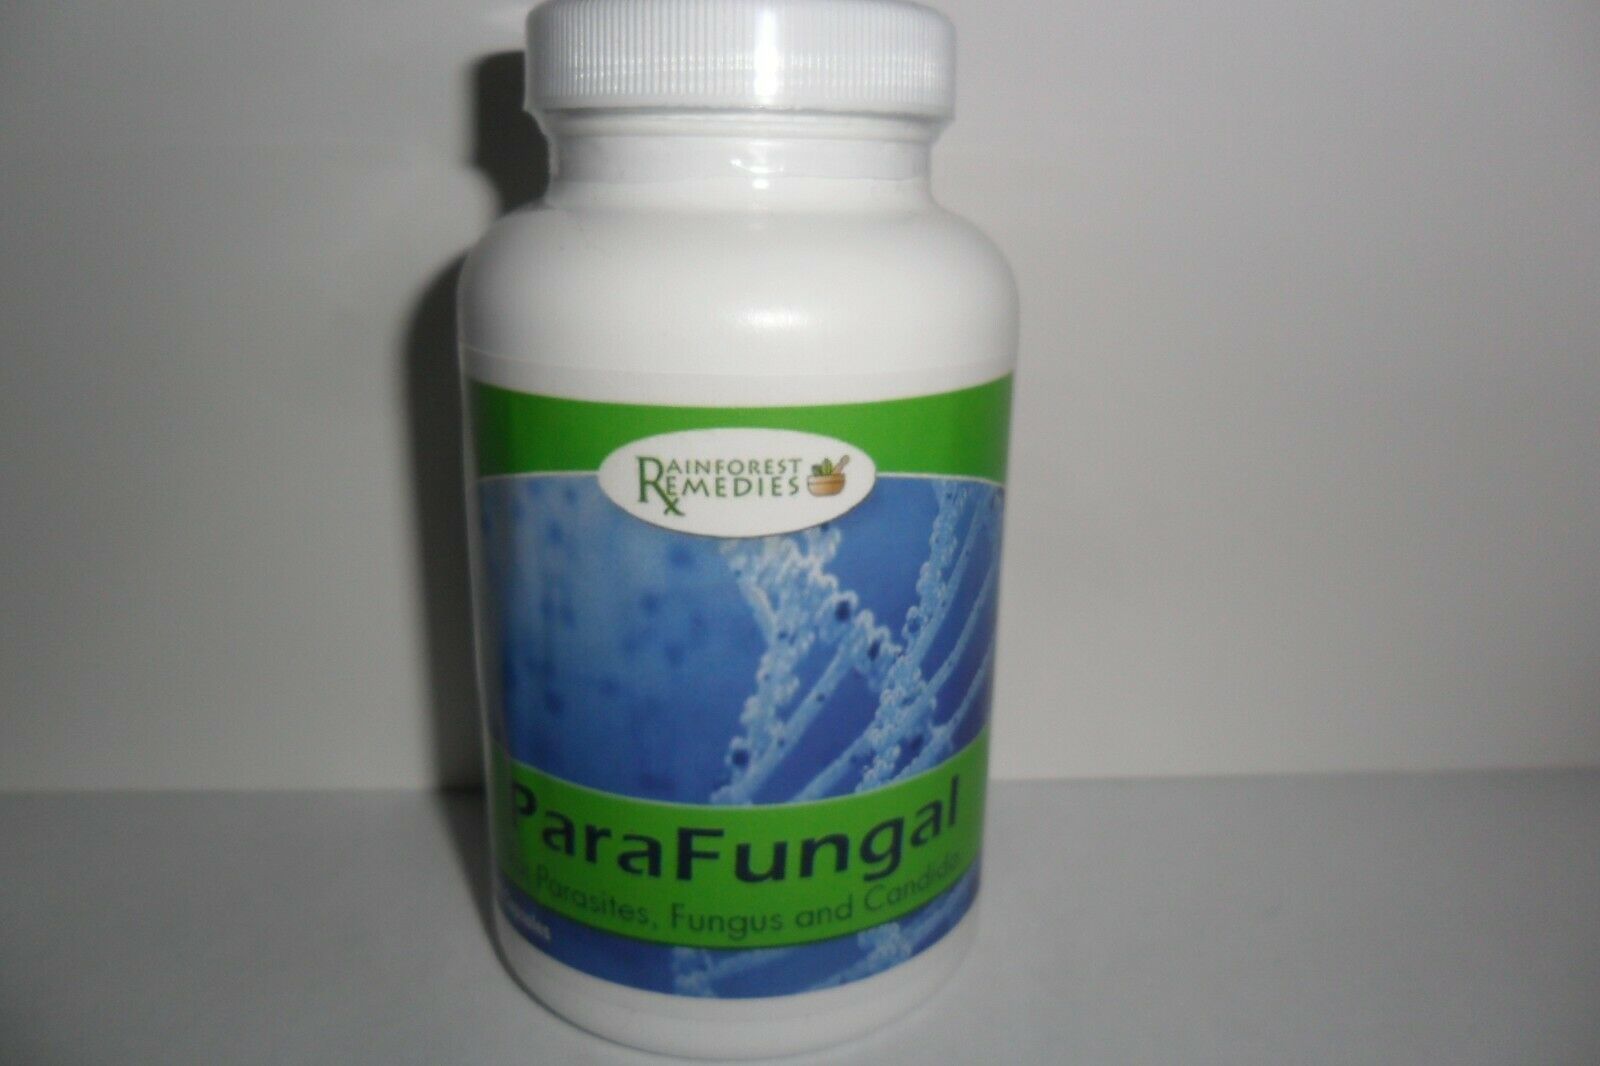 ParaFungal: Anti-Parasitic, Anti-Fungal, Anti-Bacterial, & Anti-Viral